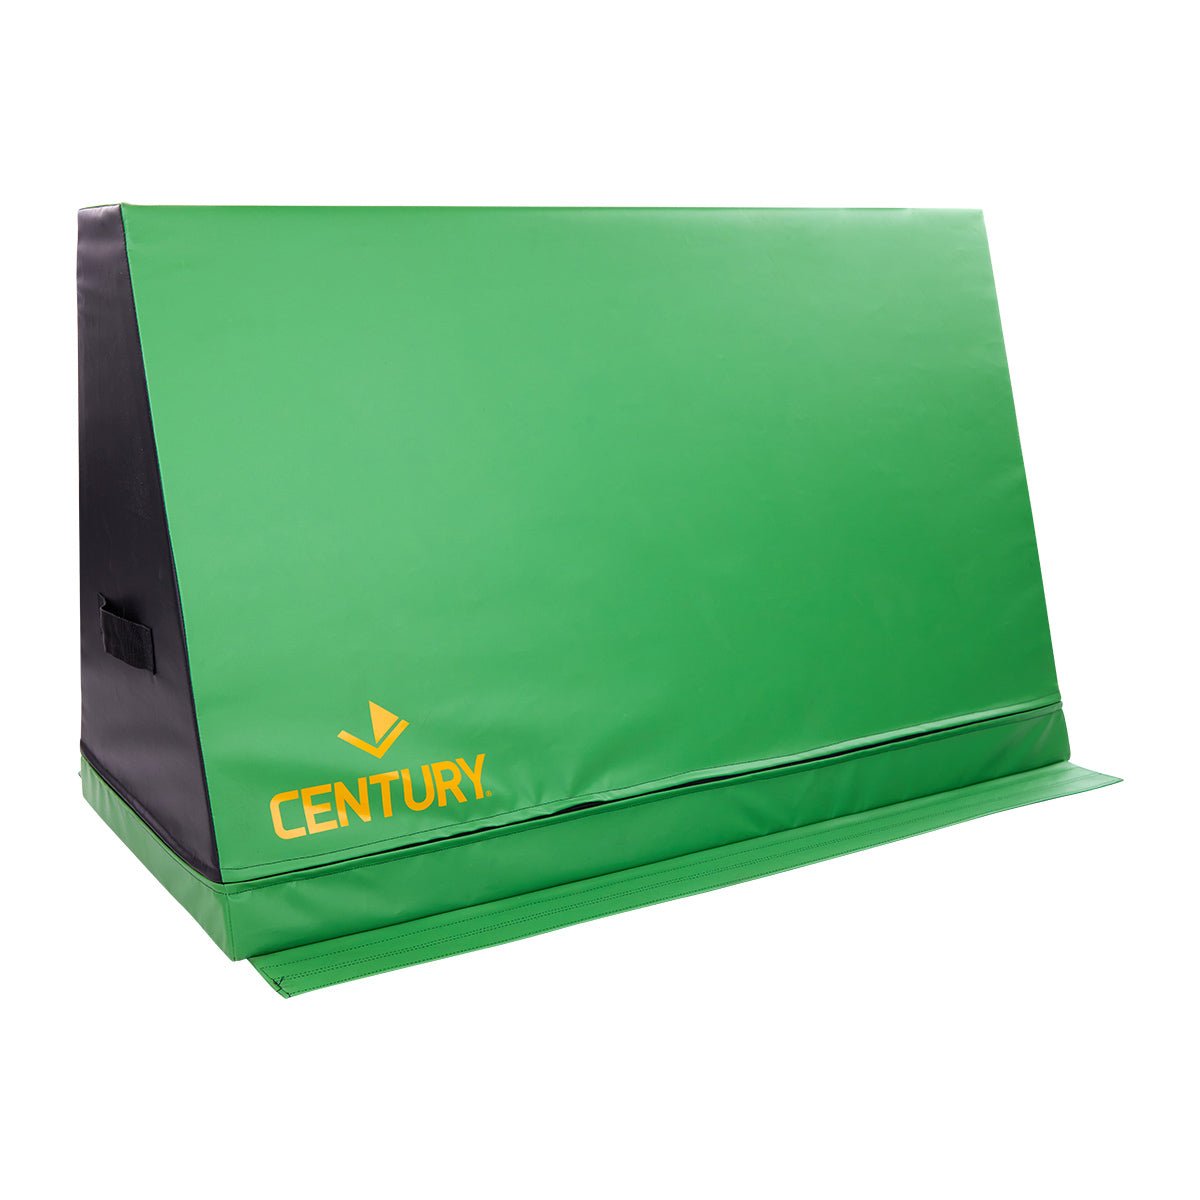 Century Ninja Vault Barrier Lime Green